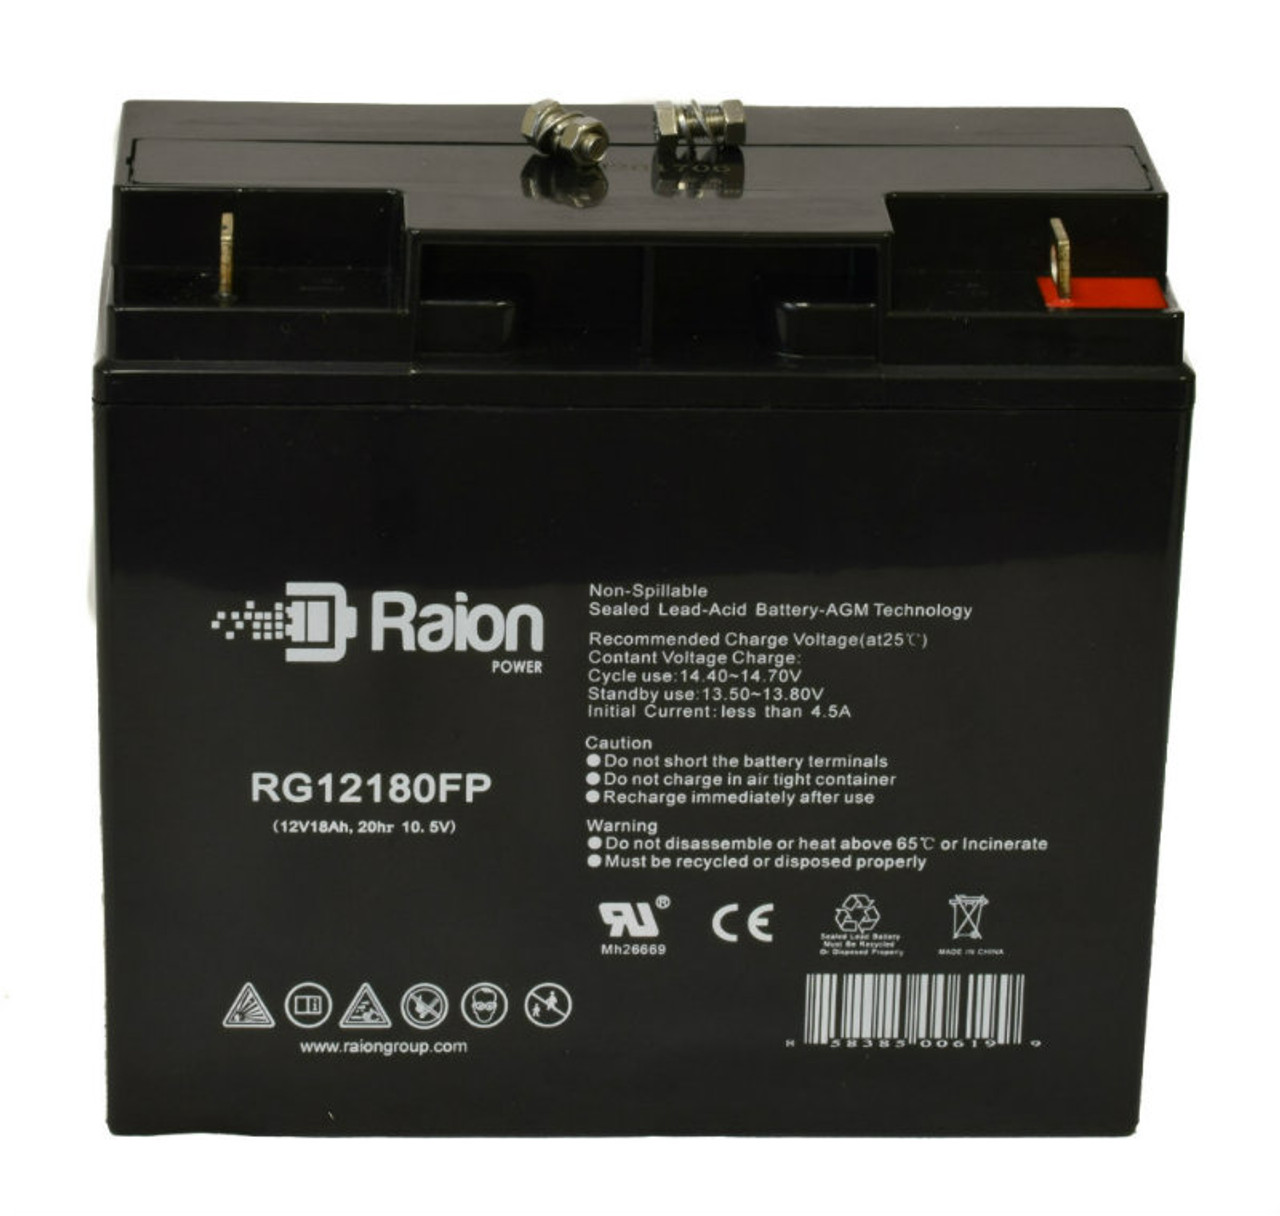 Raion Power RG12180FP 12V 18Ah Lead Acid Battery for MHB MS17-12B